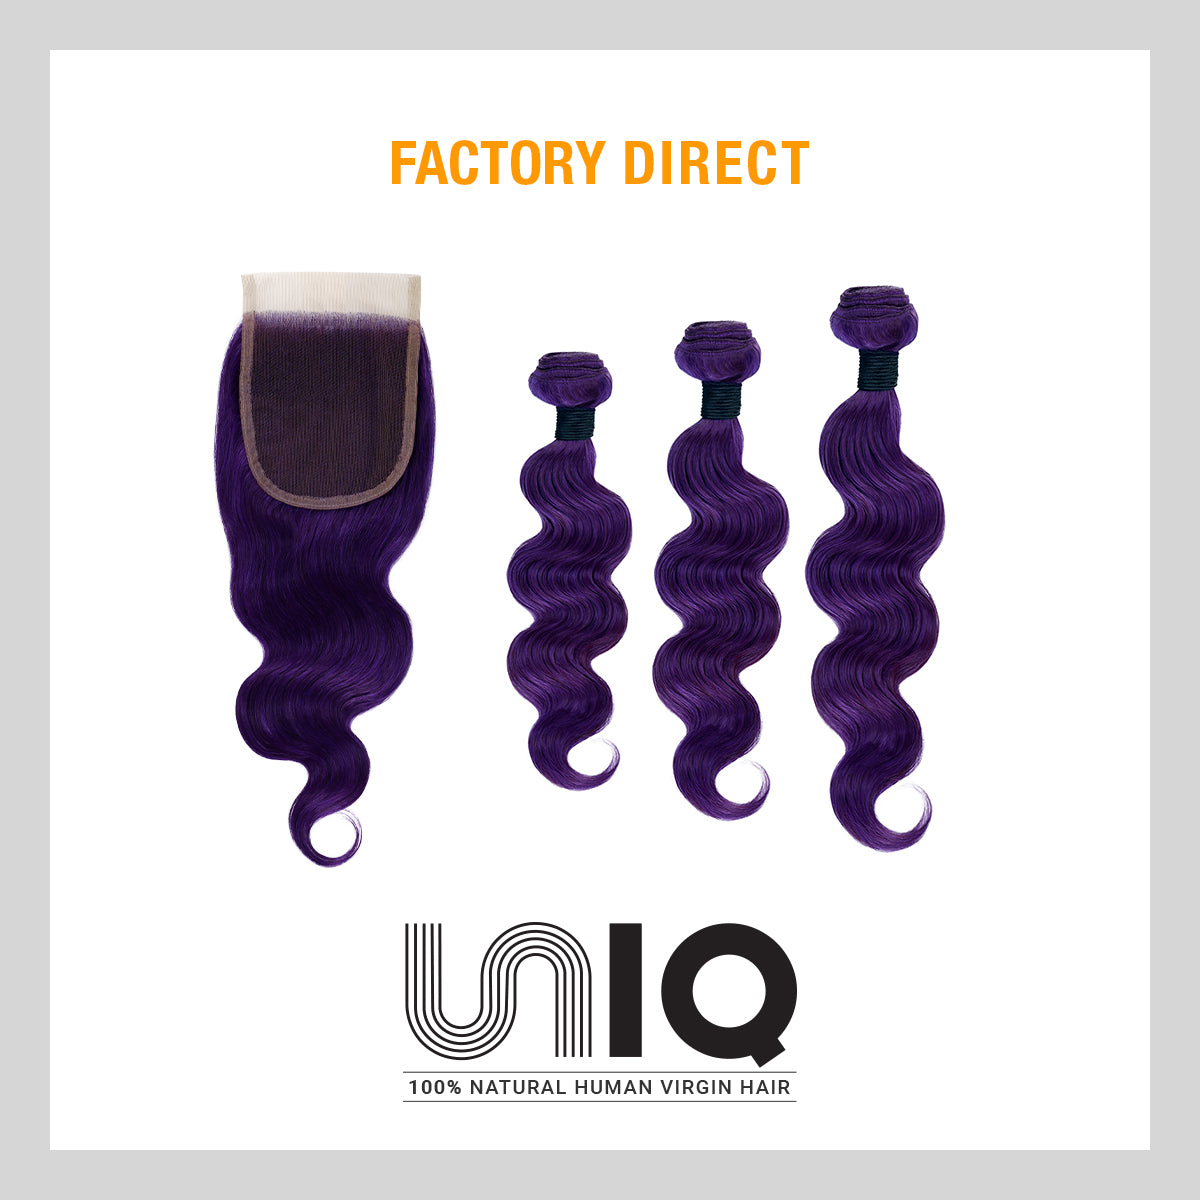 Uniq Hair 100% Virgin Human Hair Brazilian Bundle Hair Weave 7A Body + 13X4 Closure#OTPURPLE Find Your New Look Today!